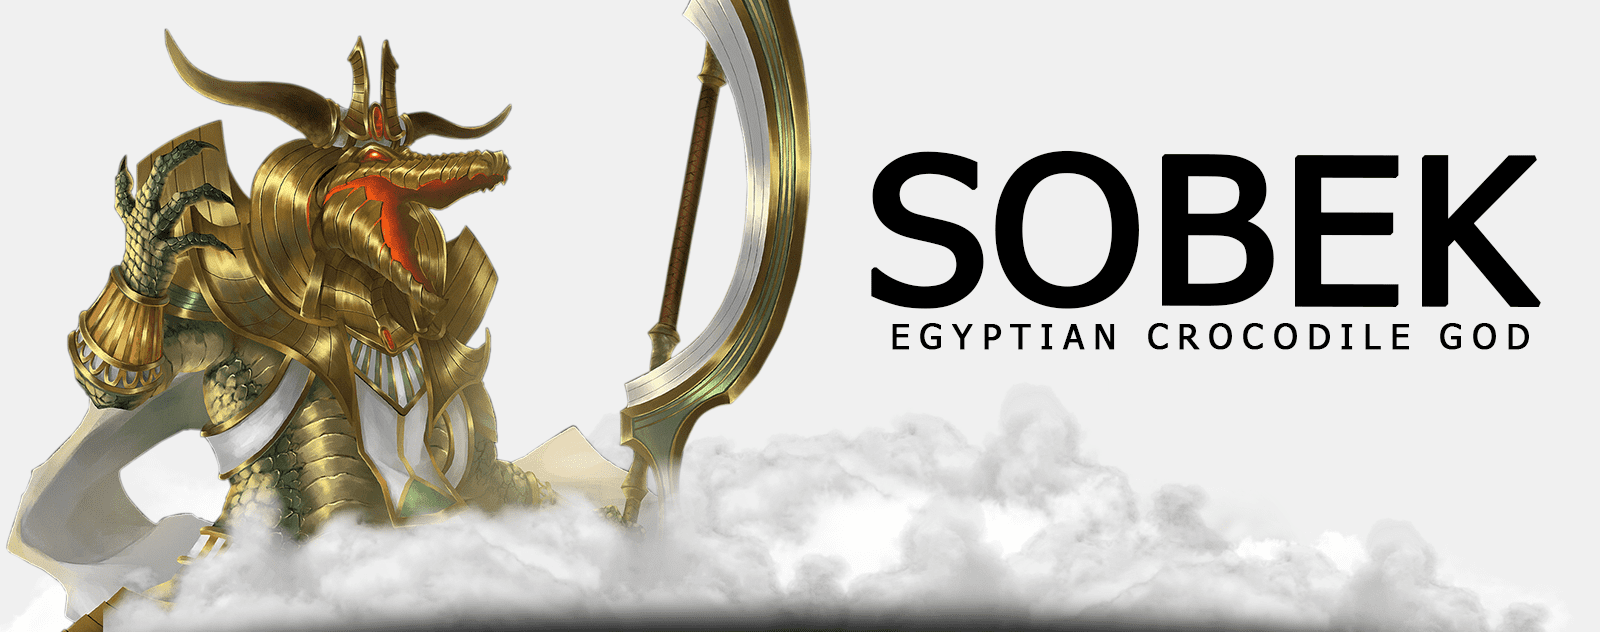 egyptian-history.com